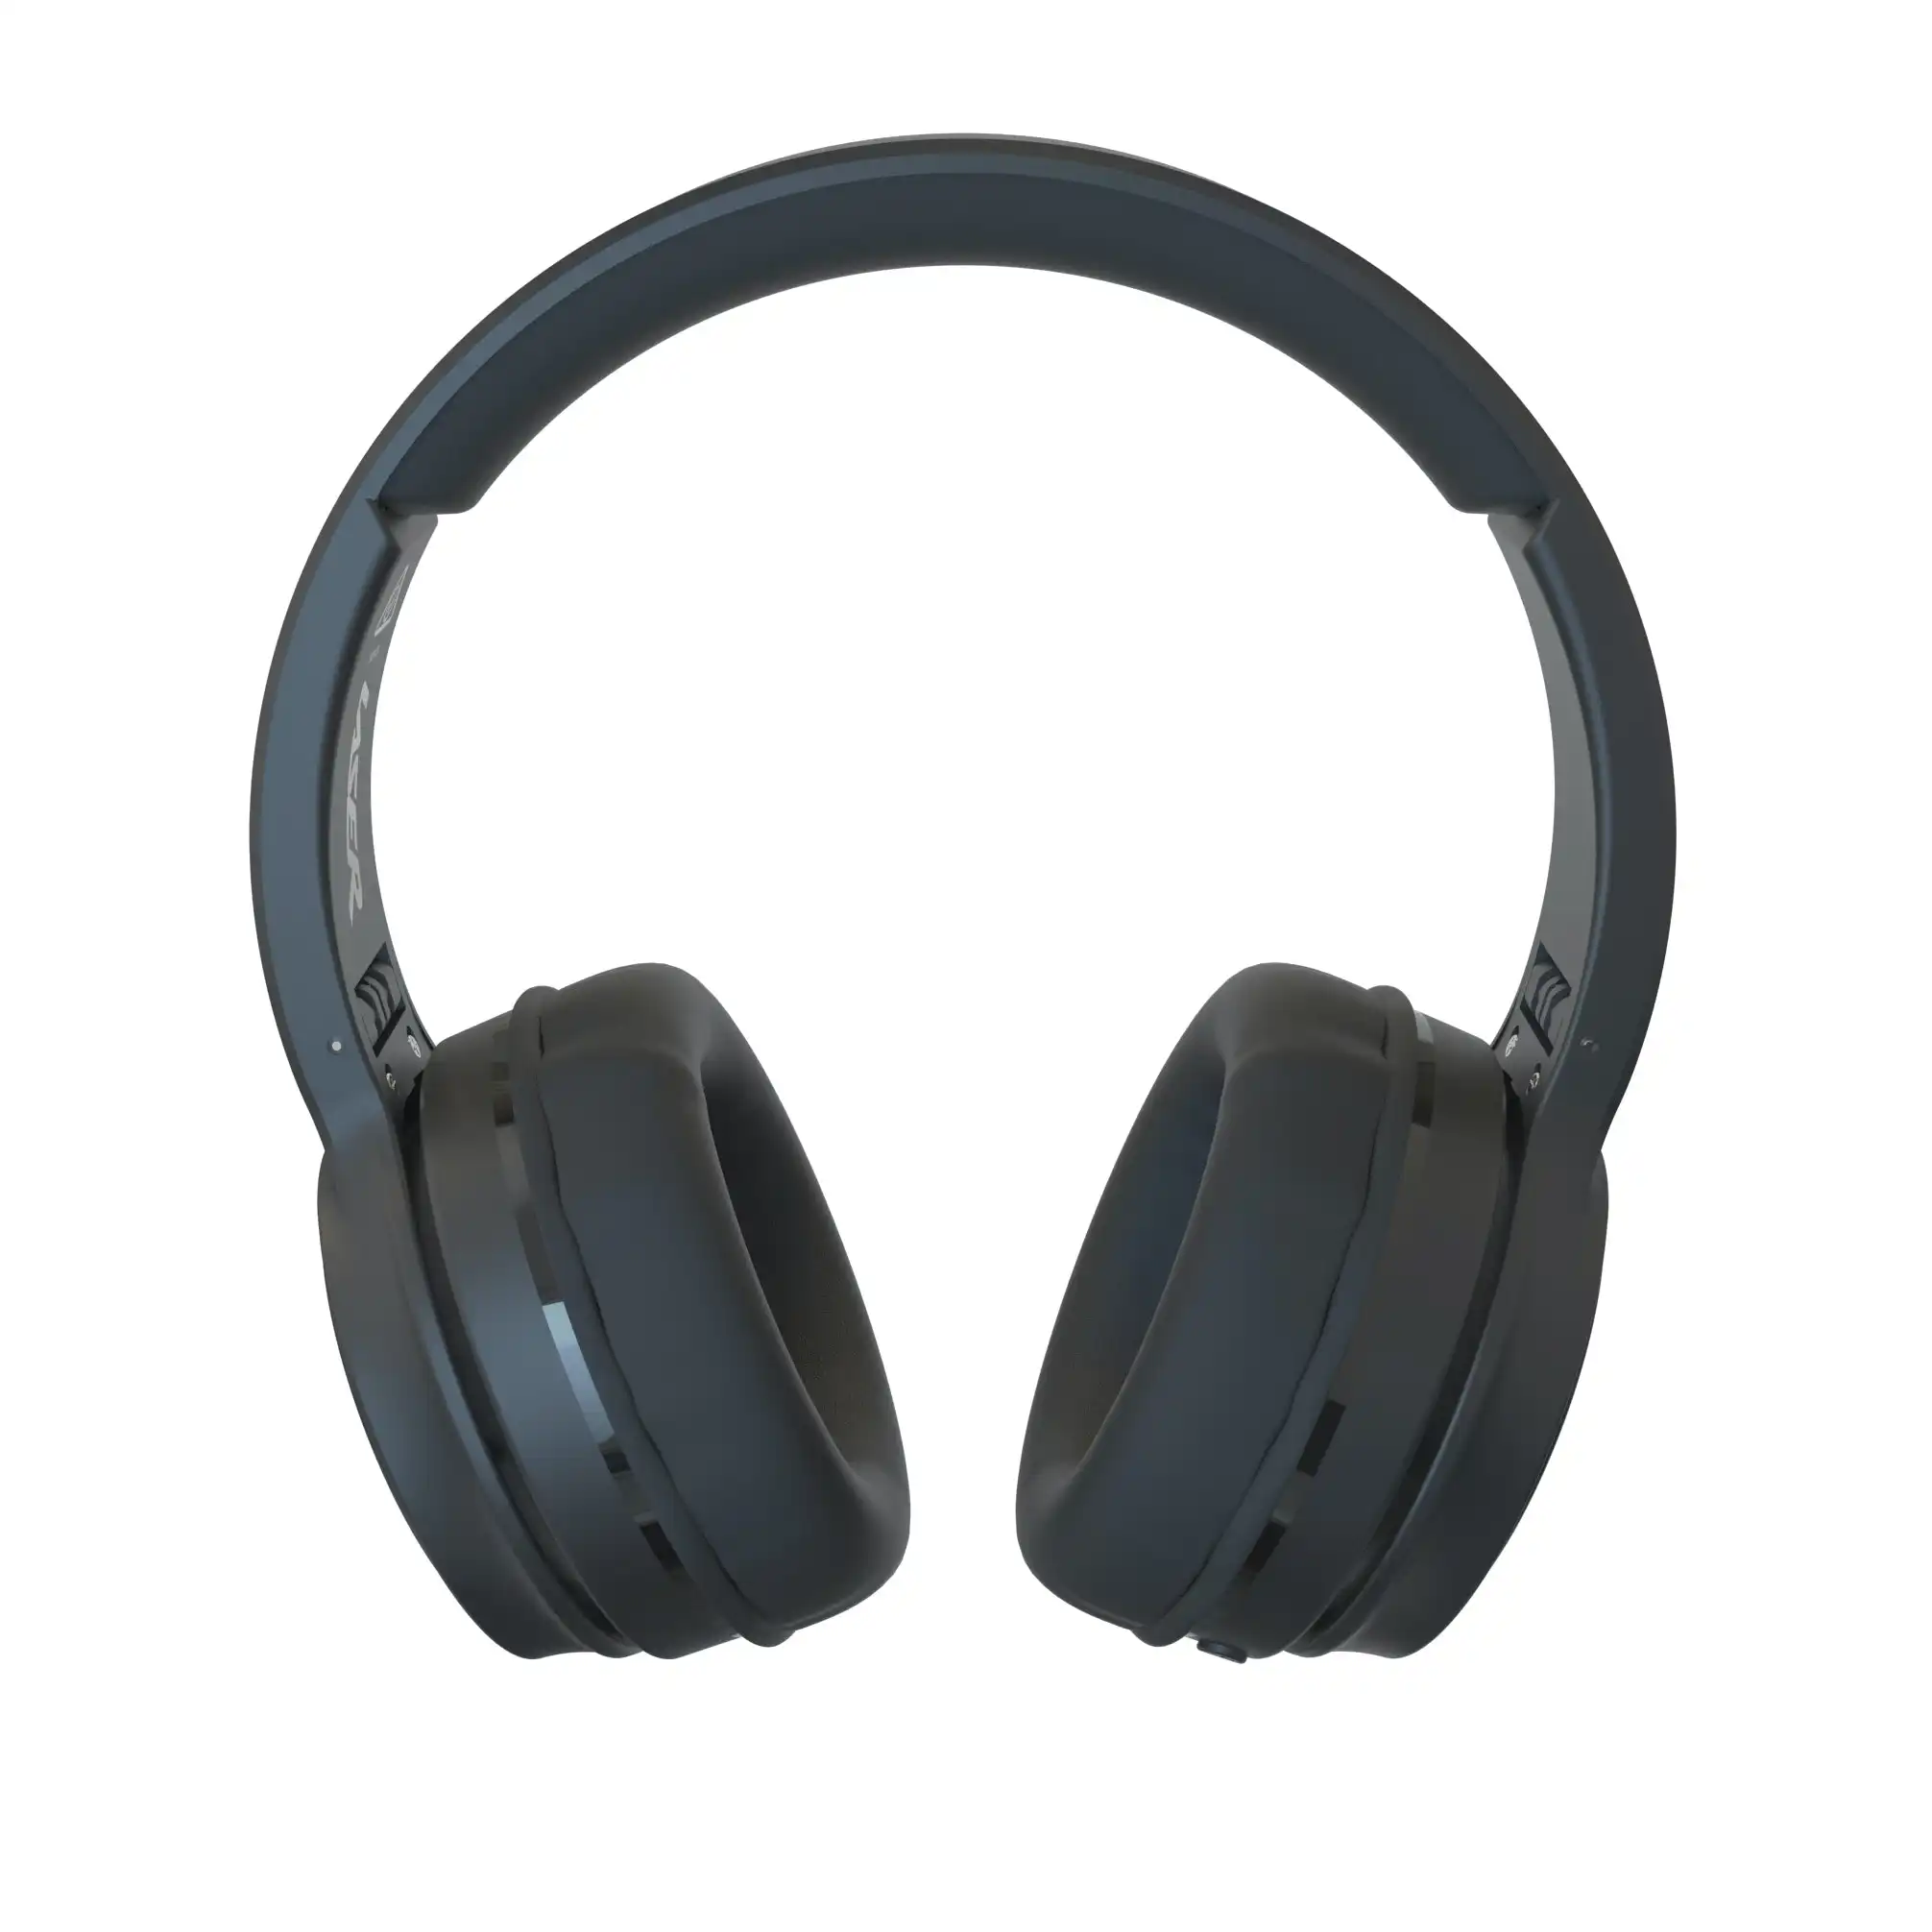 Laser Foldable Bluetooth Headphones - Black, 40MM Drivers